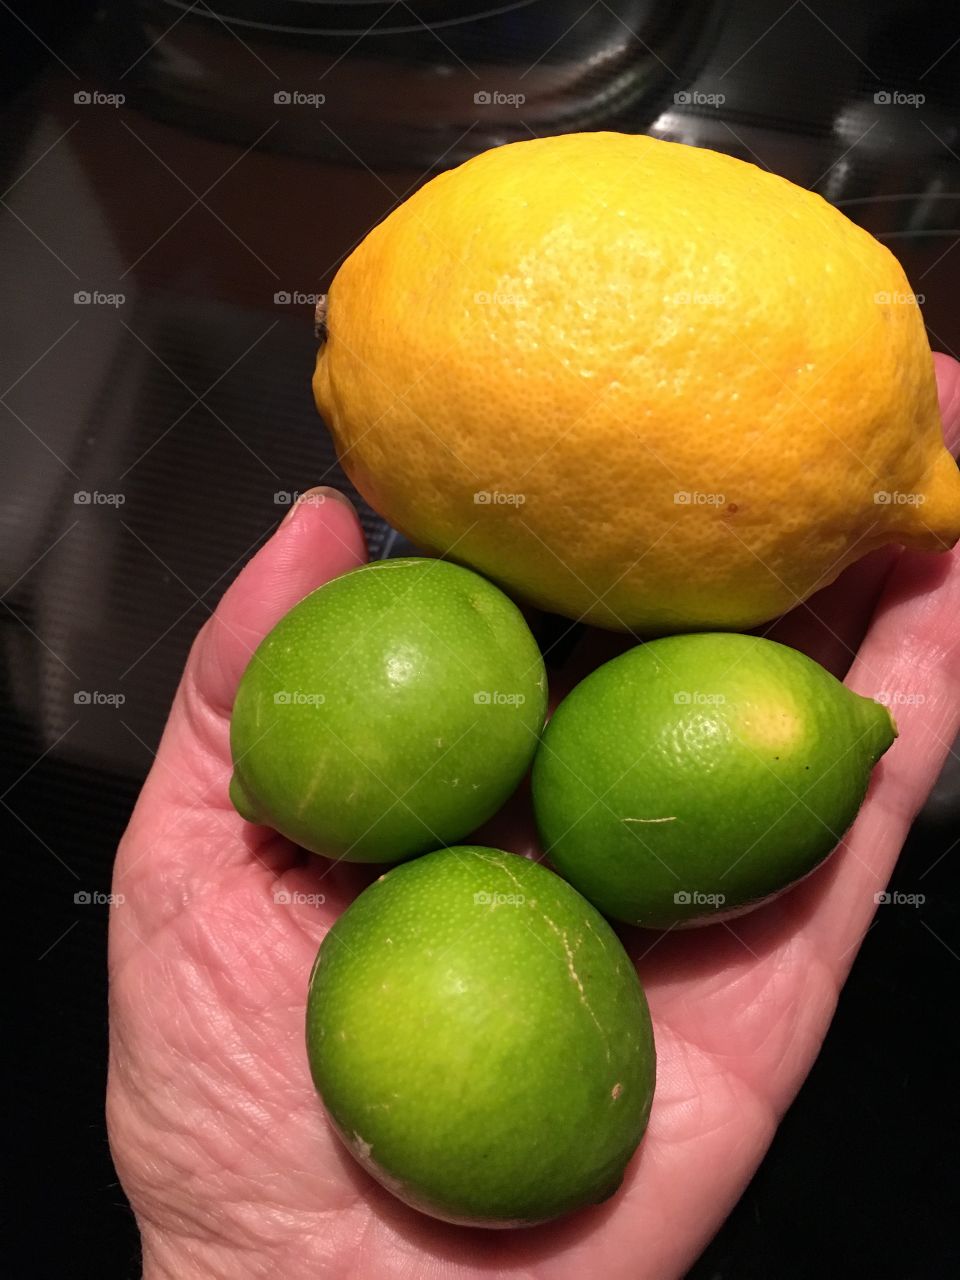 Three limes and a lemon